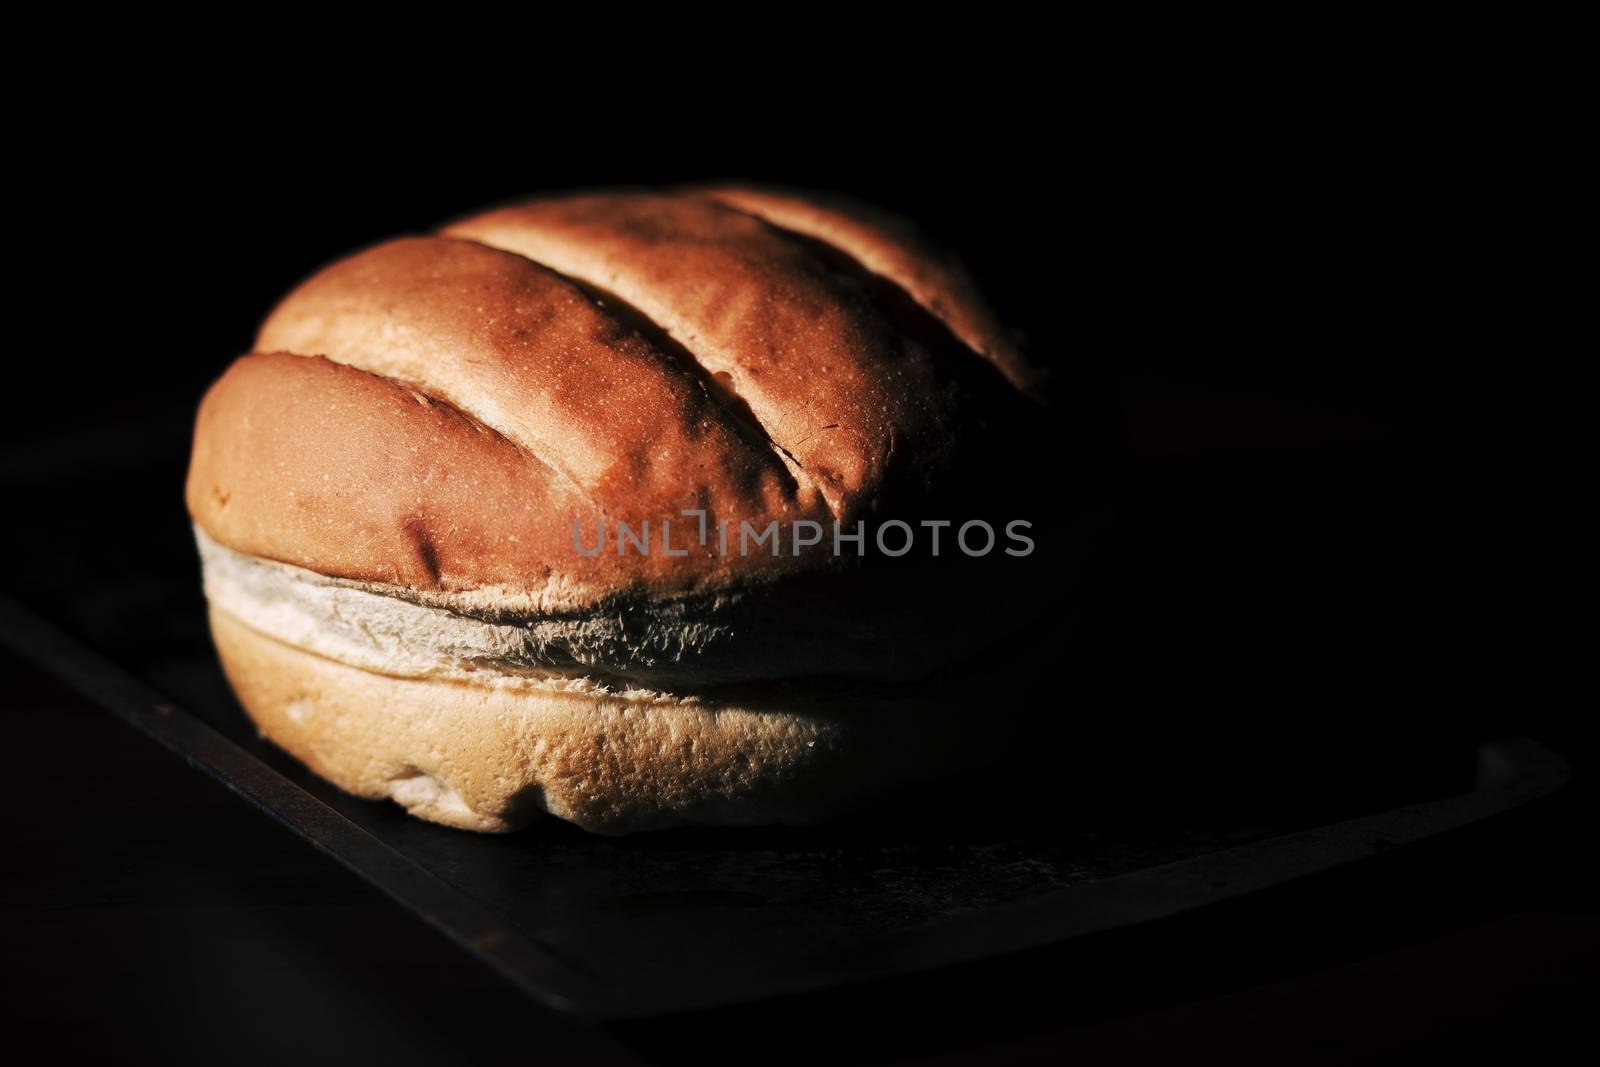 Round loaf of bread by artistrobd